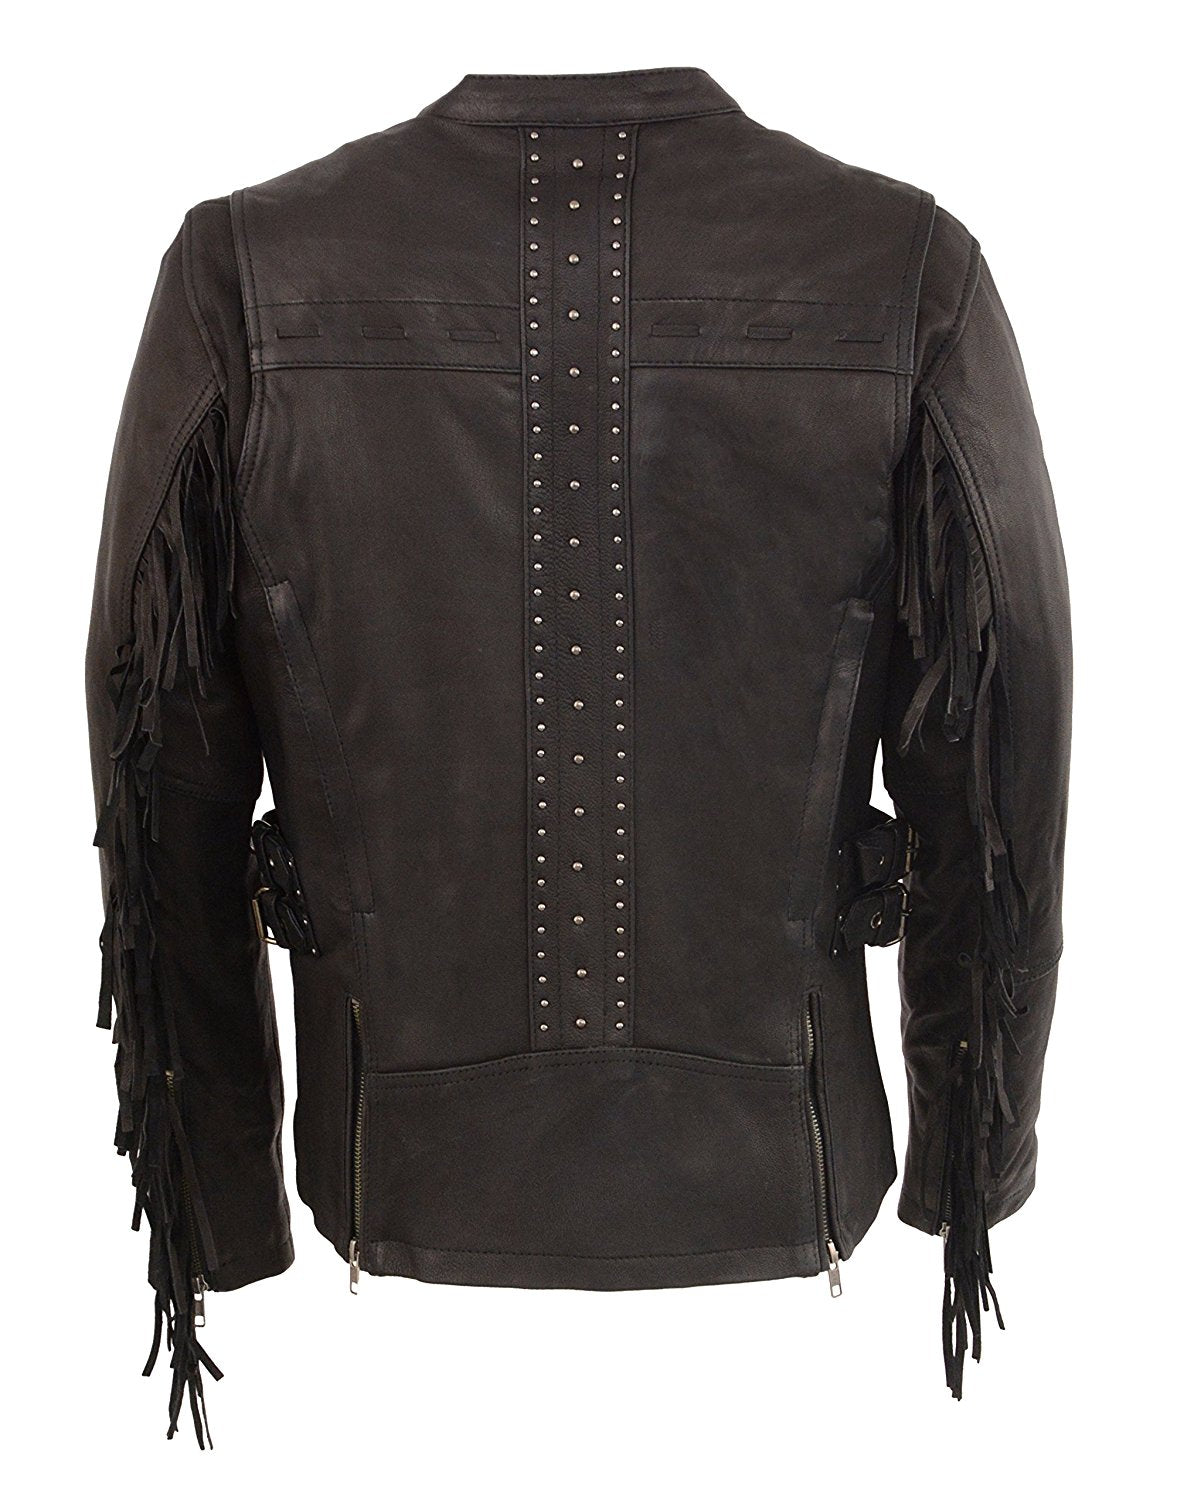 Ladies Lightweight Leather Scuba Jacket w/ Fringe